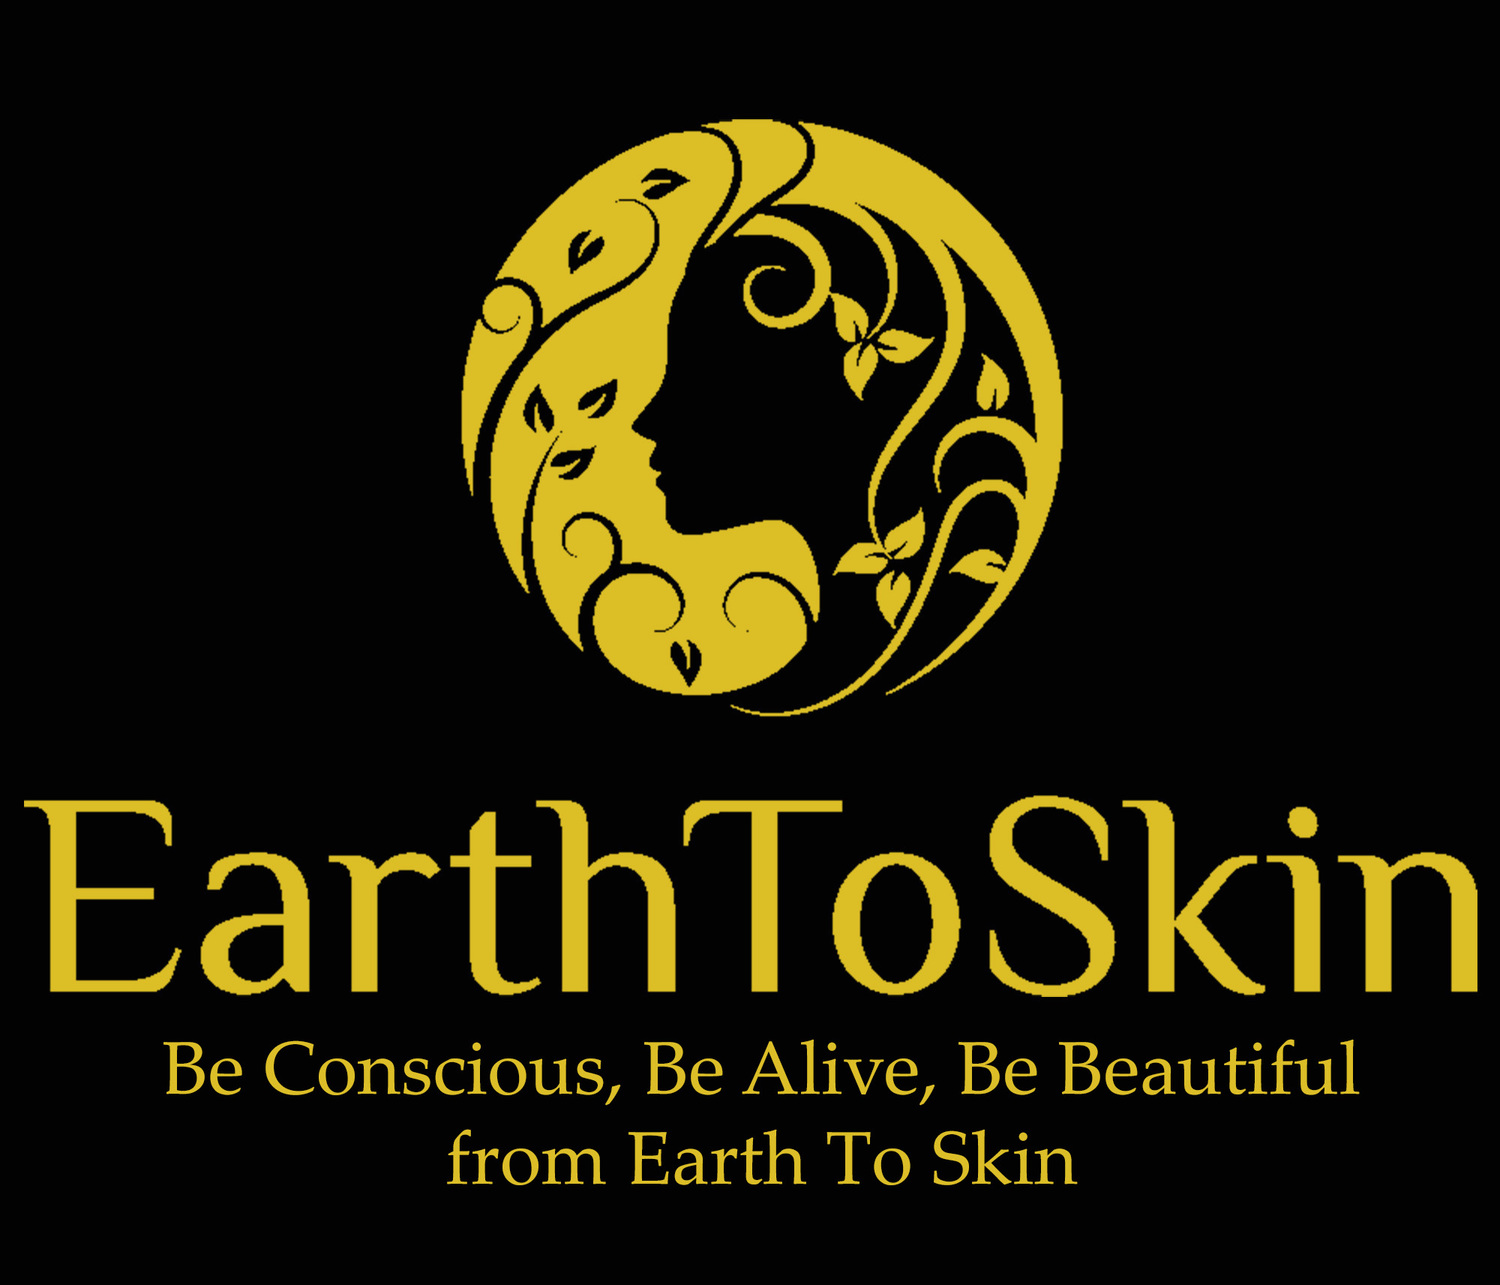 Earth To Skin